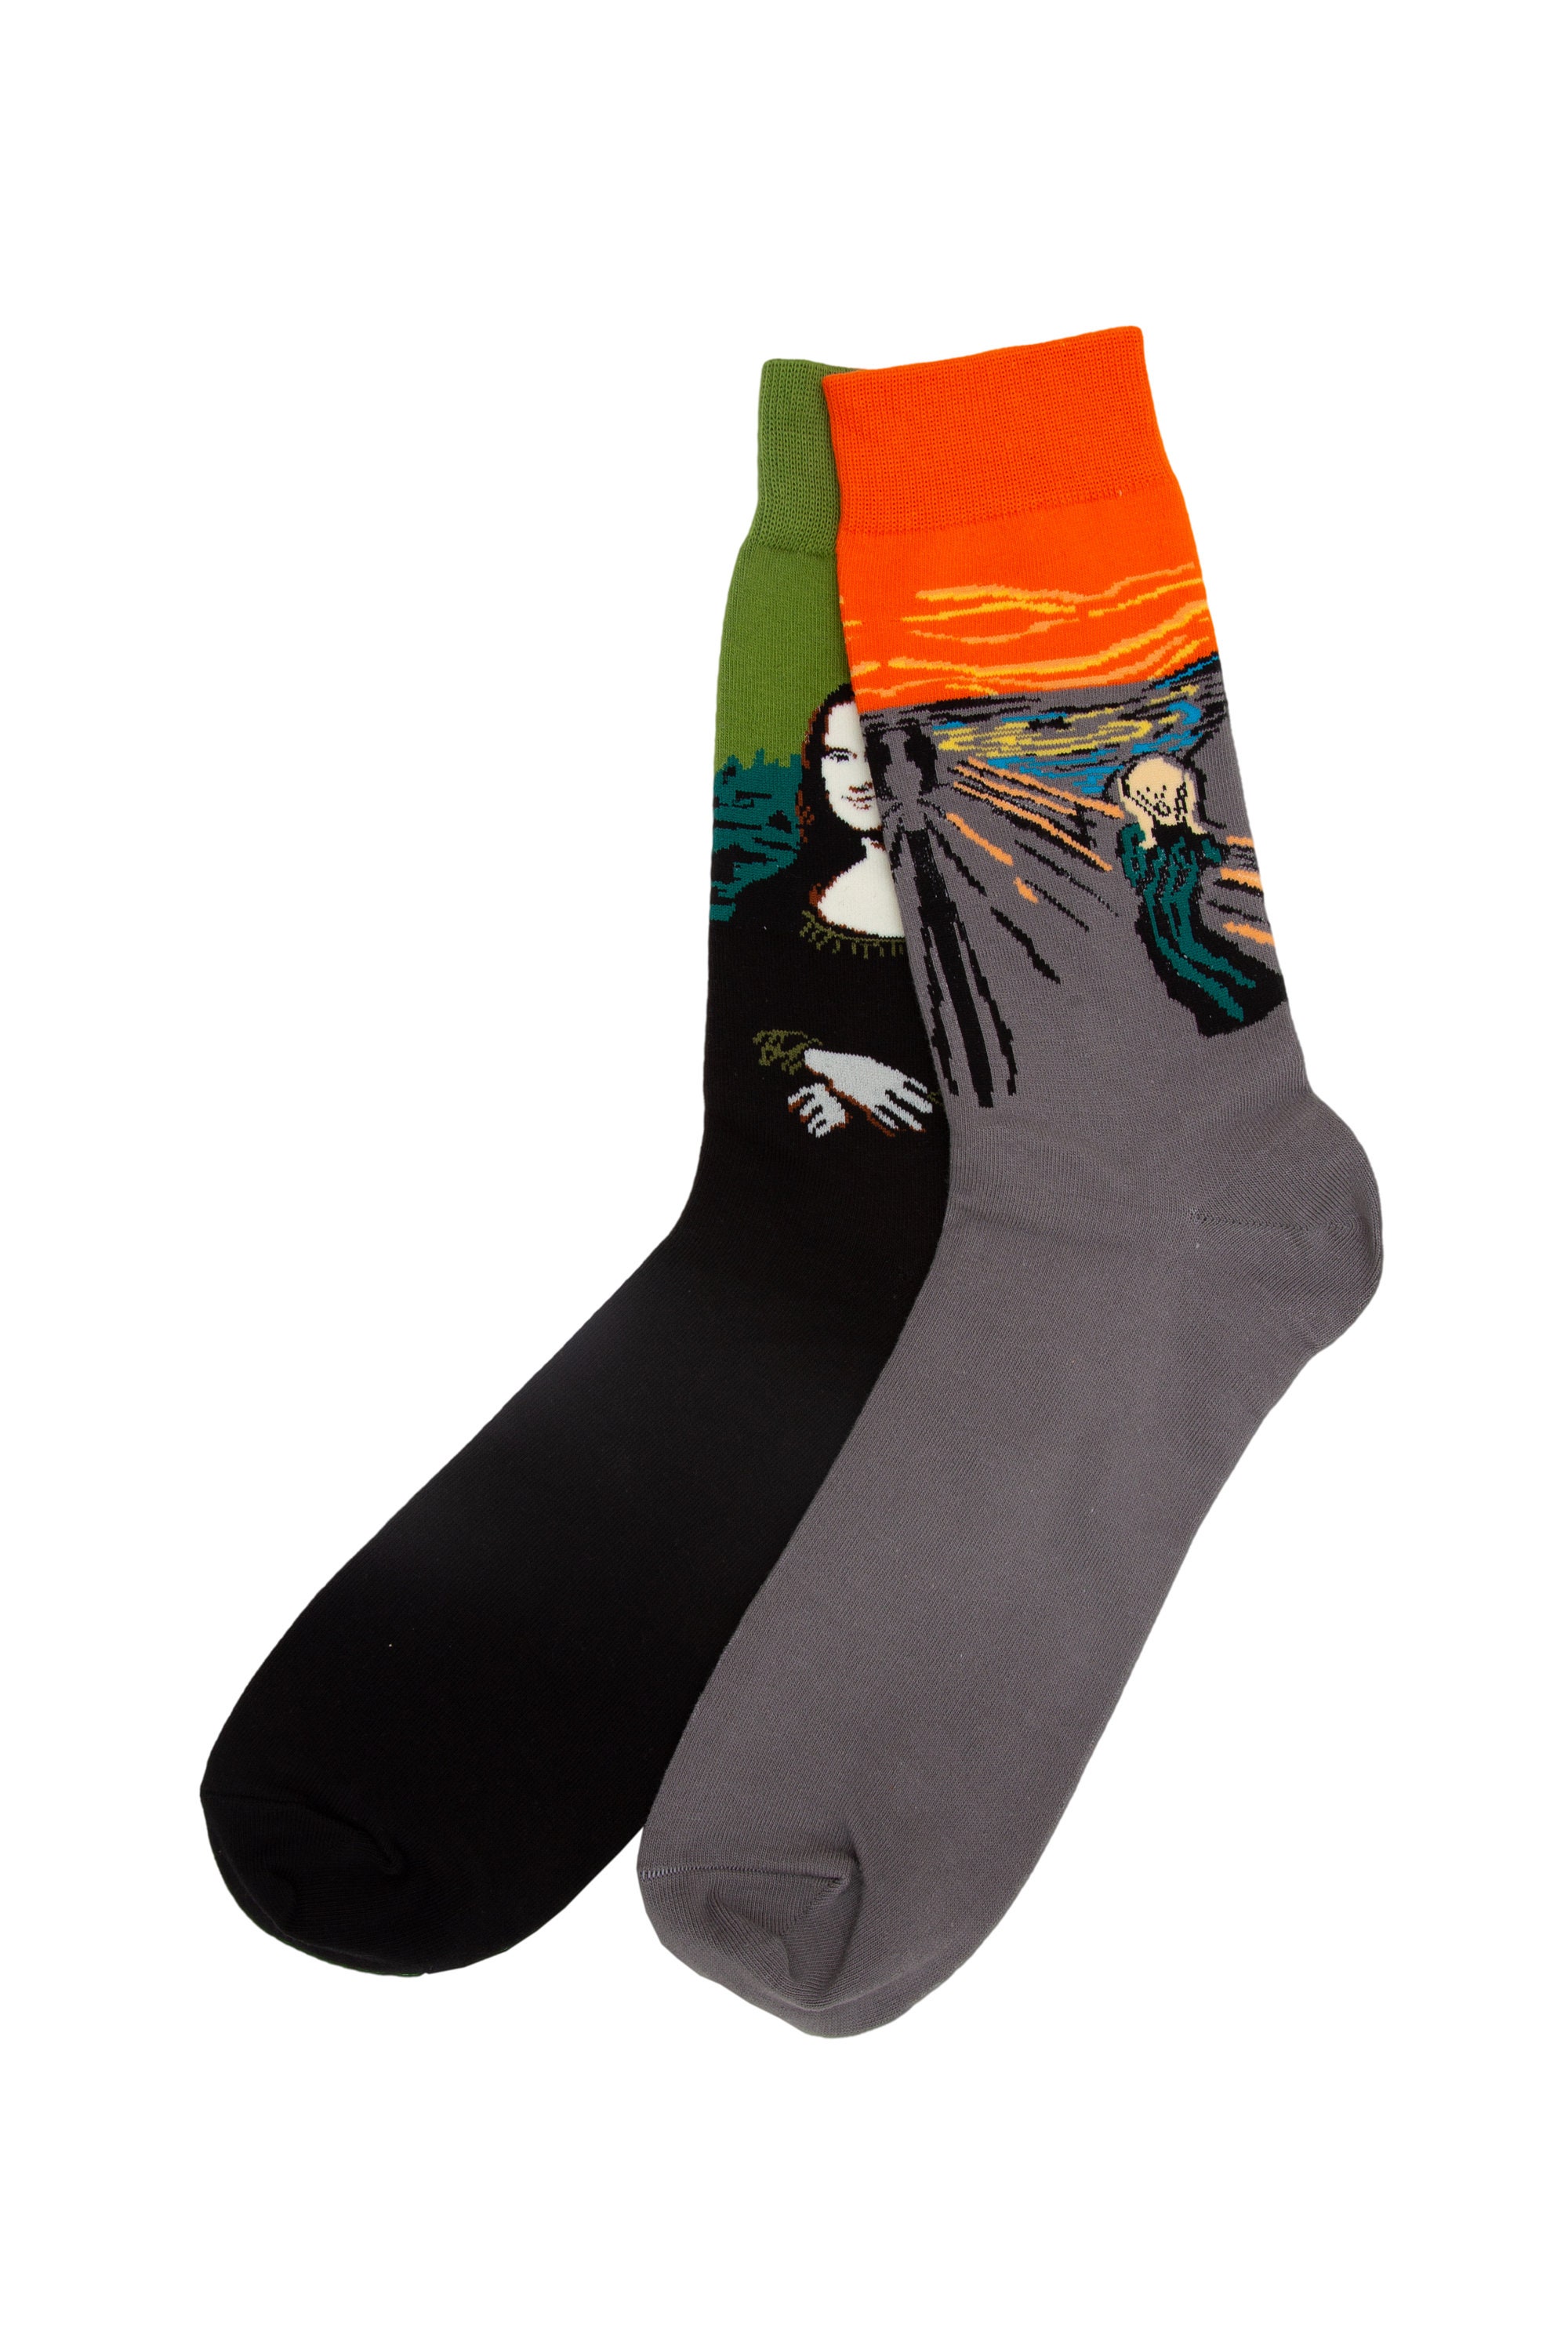 Mona Lisa & Scream Odd Socks Happy Funky Socks Cool - Etsy